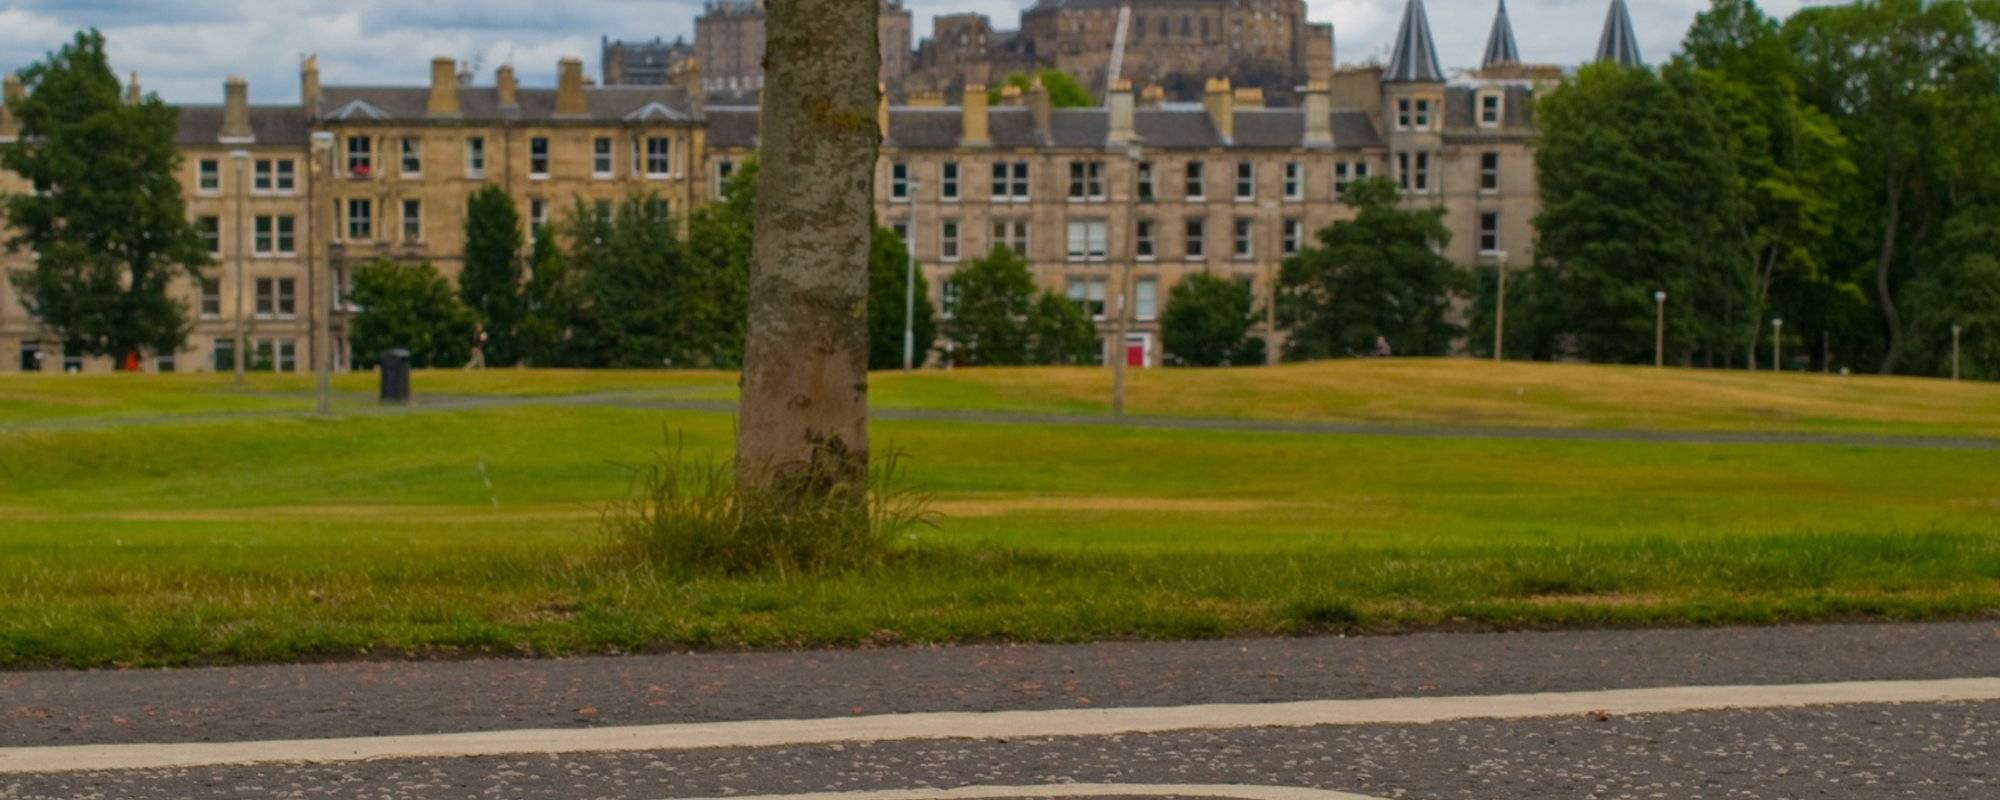 Cycling Through Central Edinburgh - A Photographic Narrative Of Sight & Sign